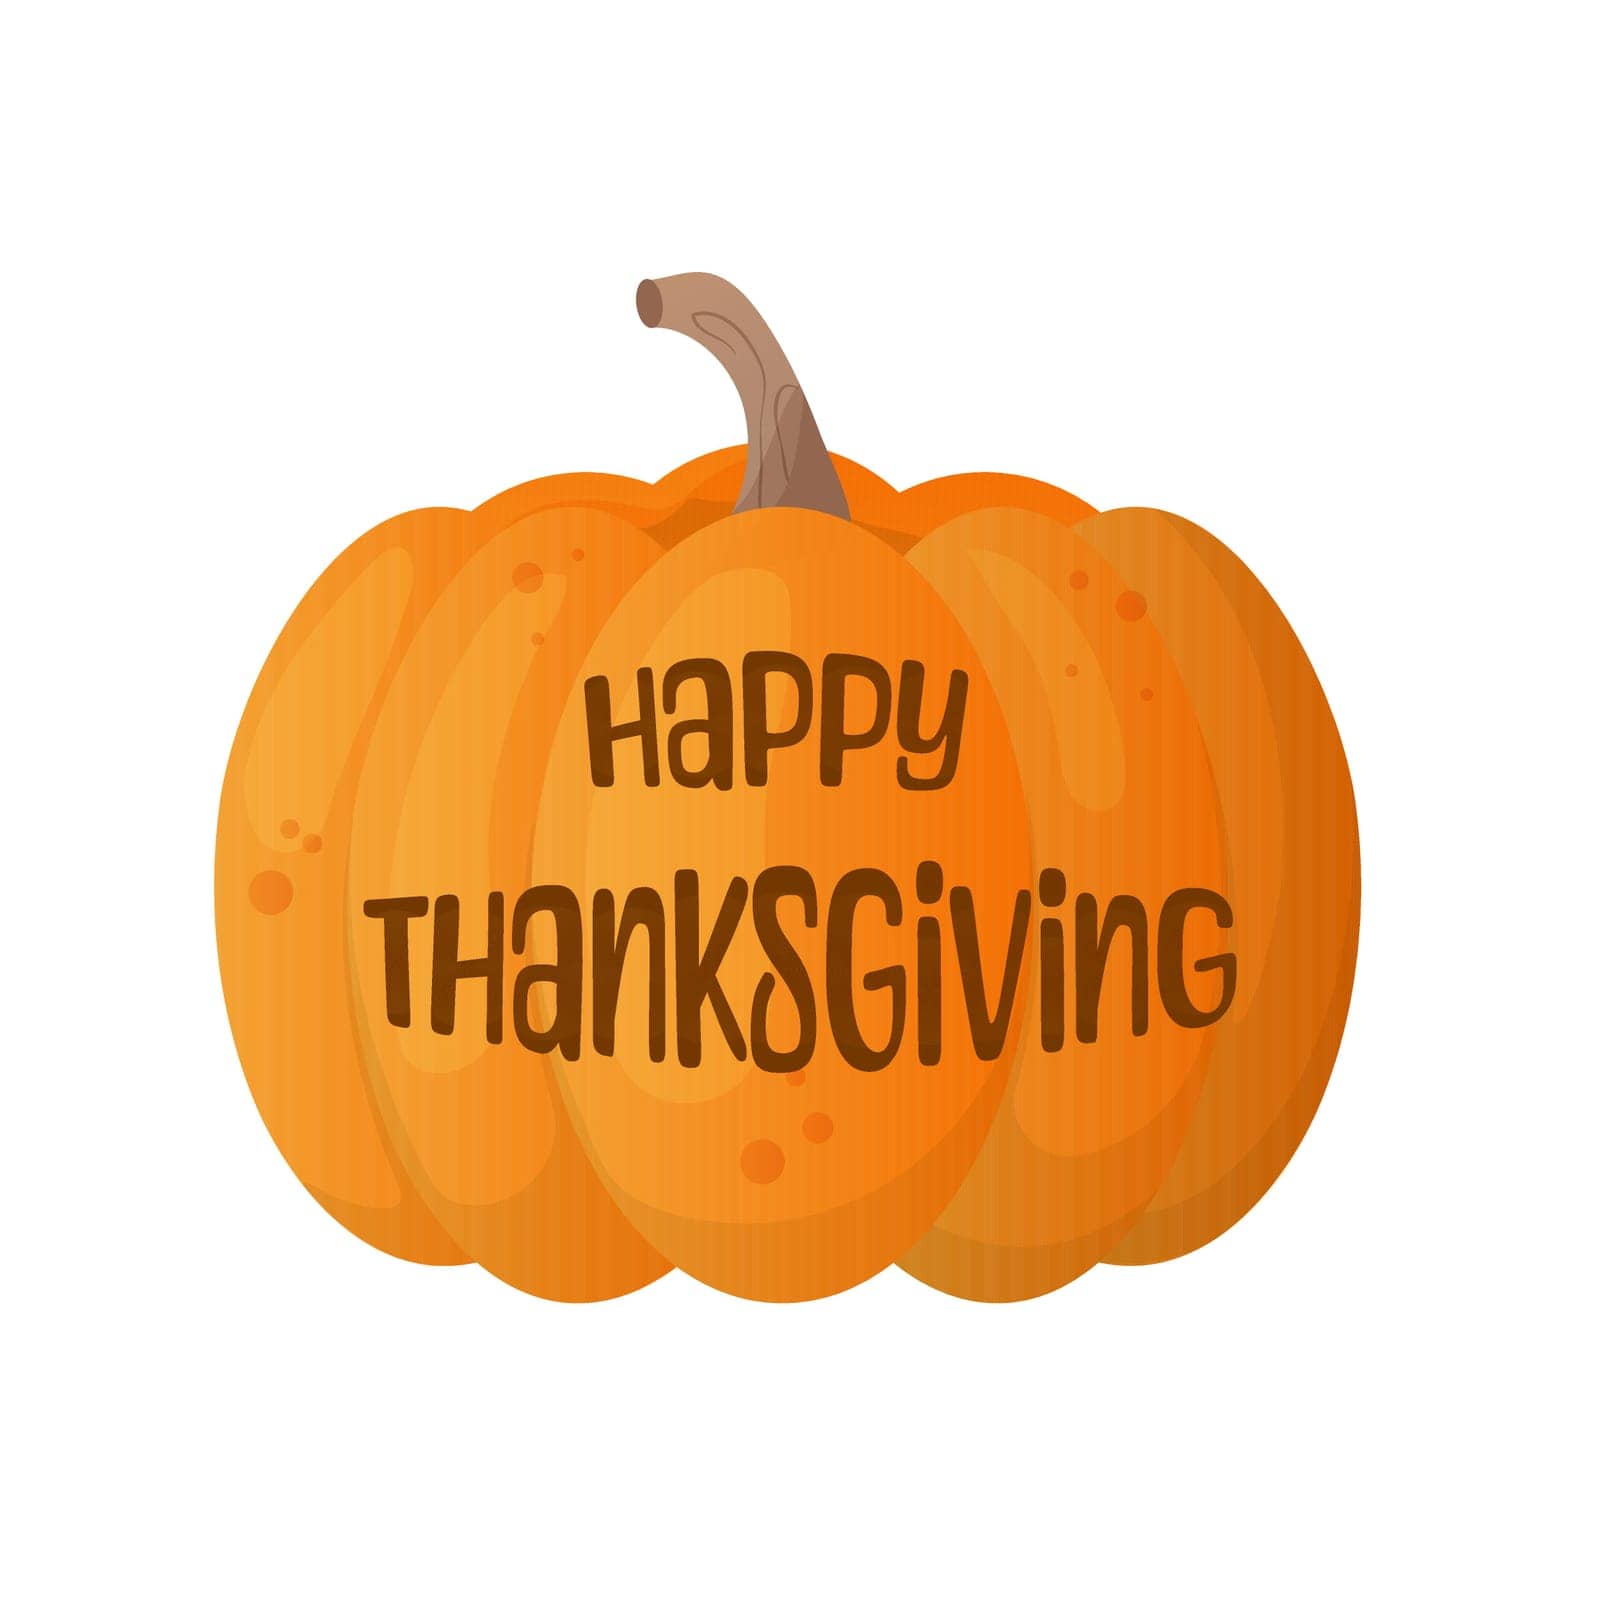 Thanksgiving pumpkin carving greeting inscription. Vector illustration by Ann4black